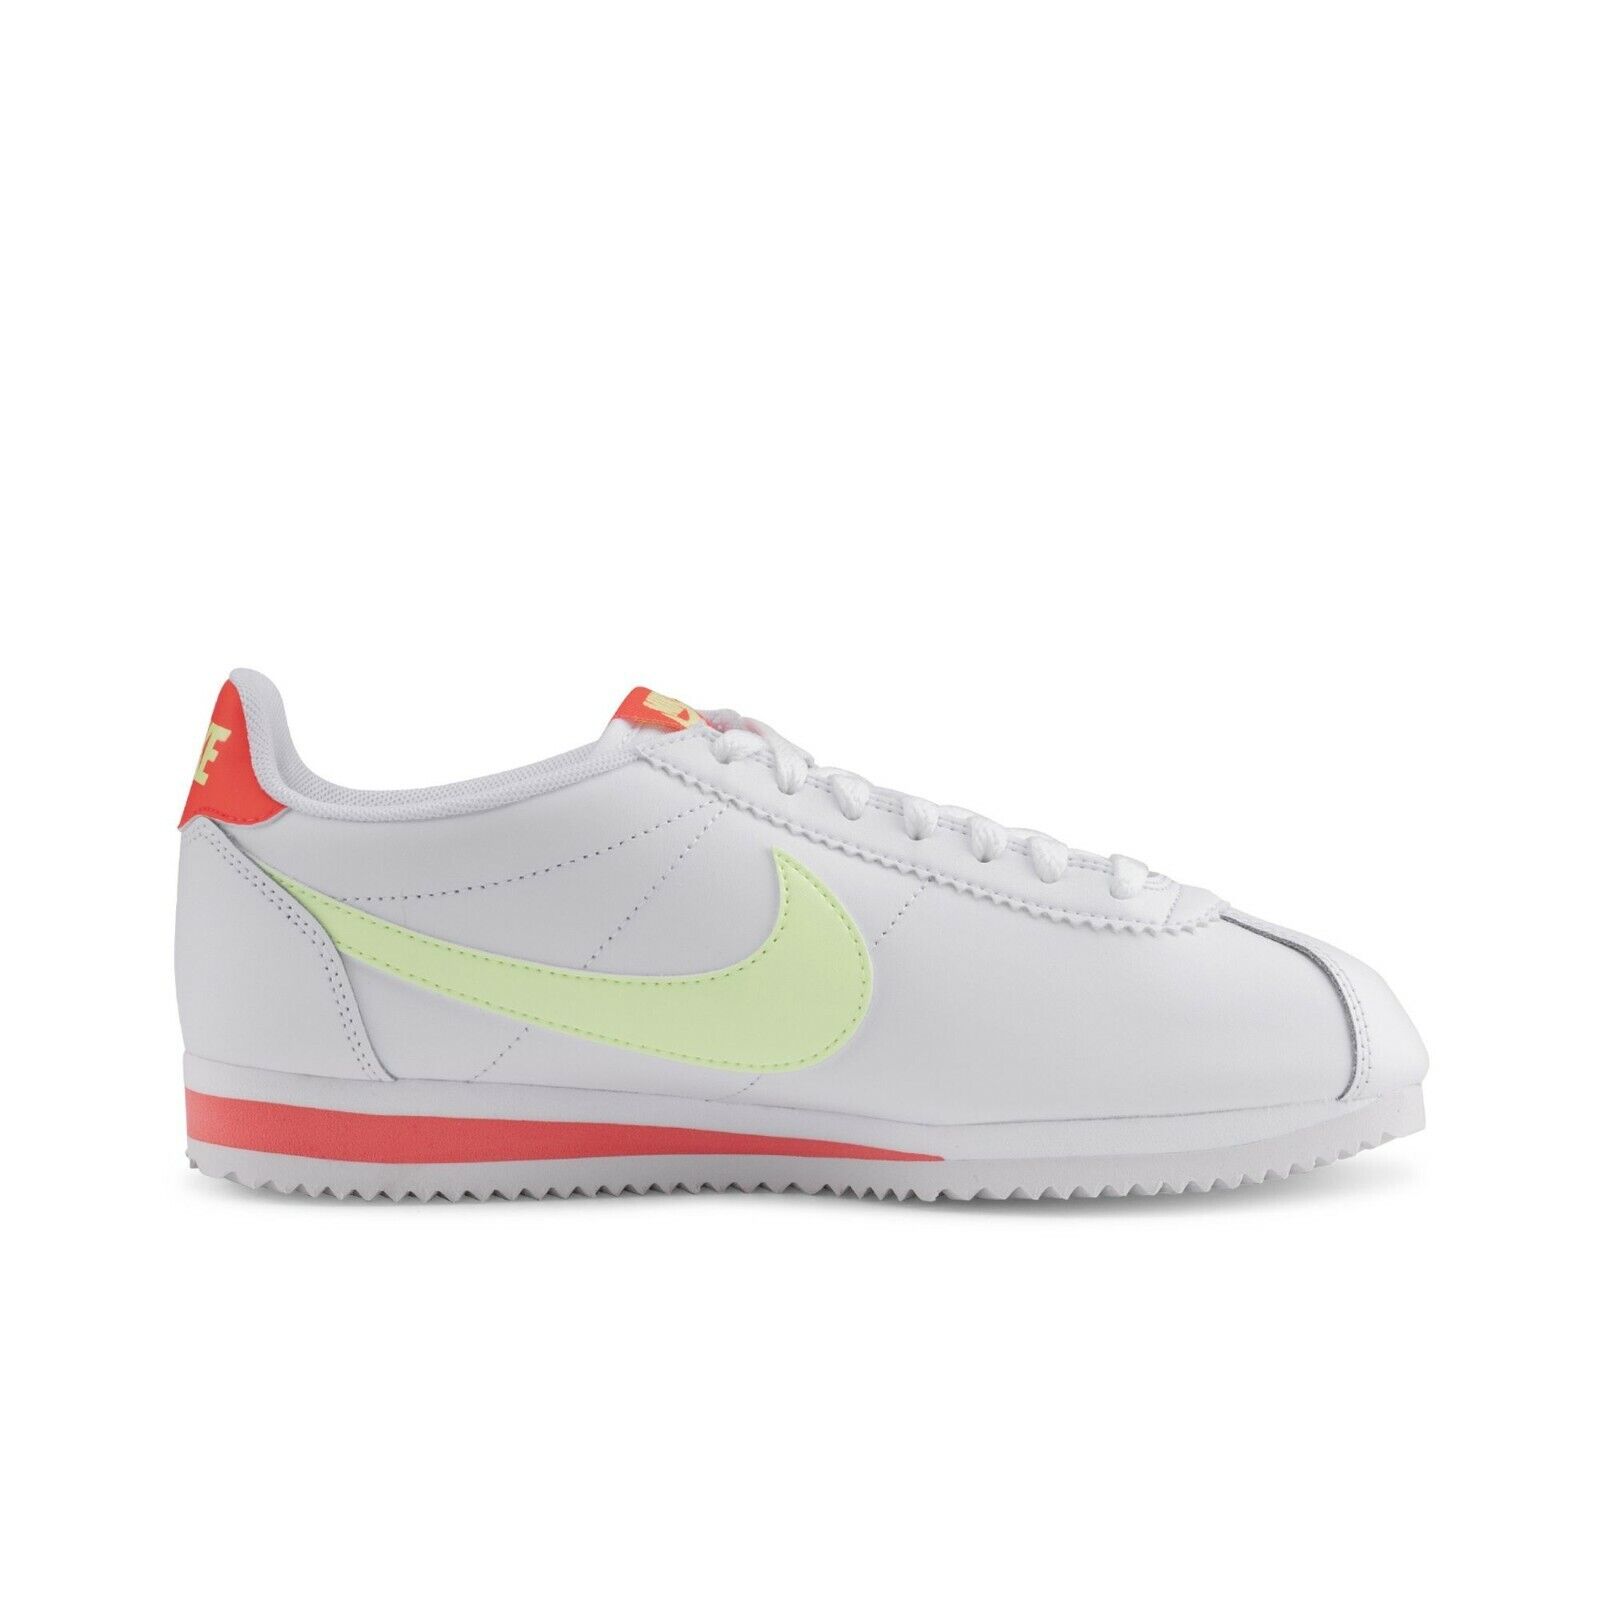 Nike Classic Cortez Leather 807471 116 White/Barely Volt Wmn Sz 